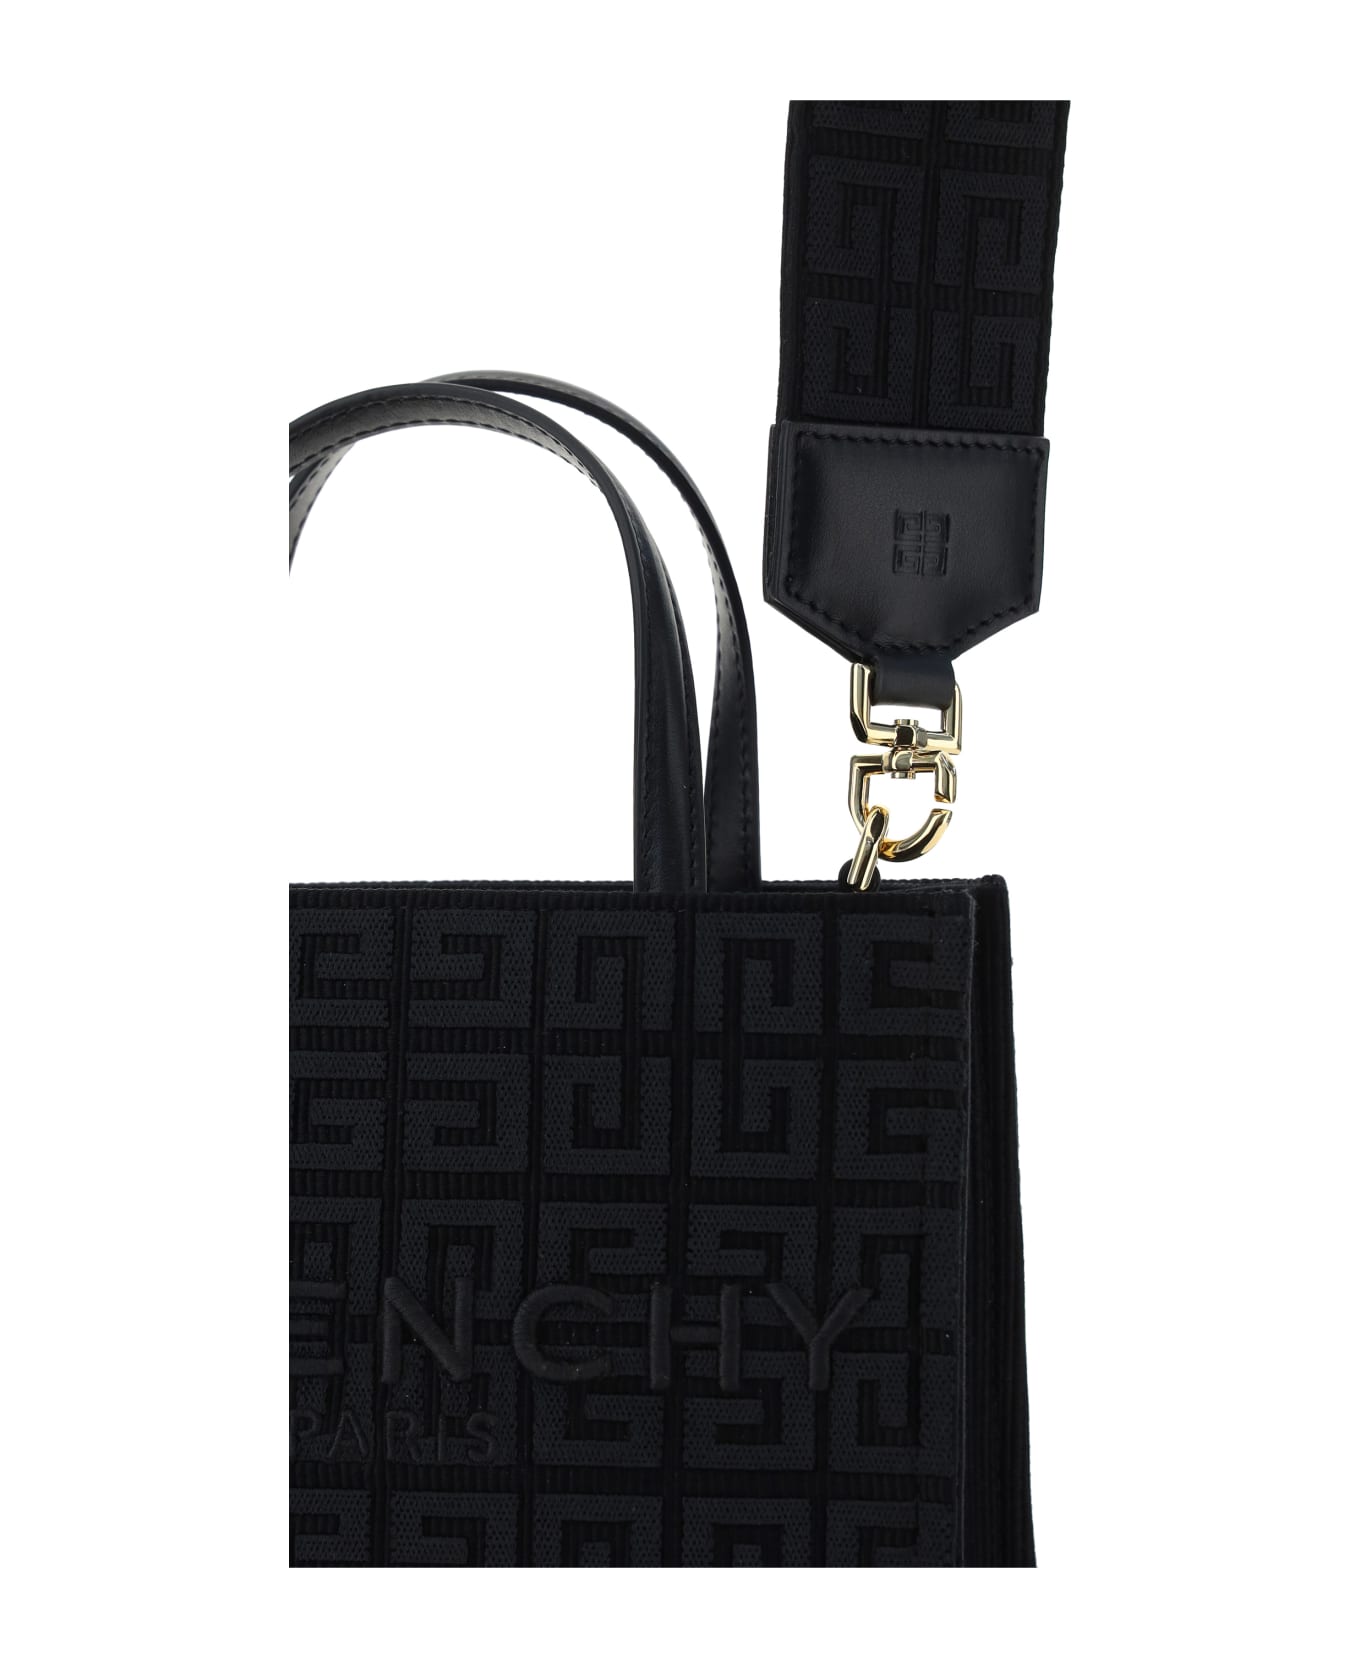 Givenchy G-tote Mini Handbag - Black